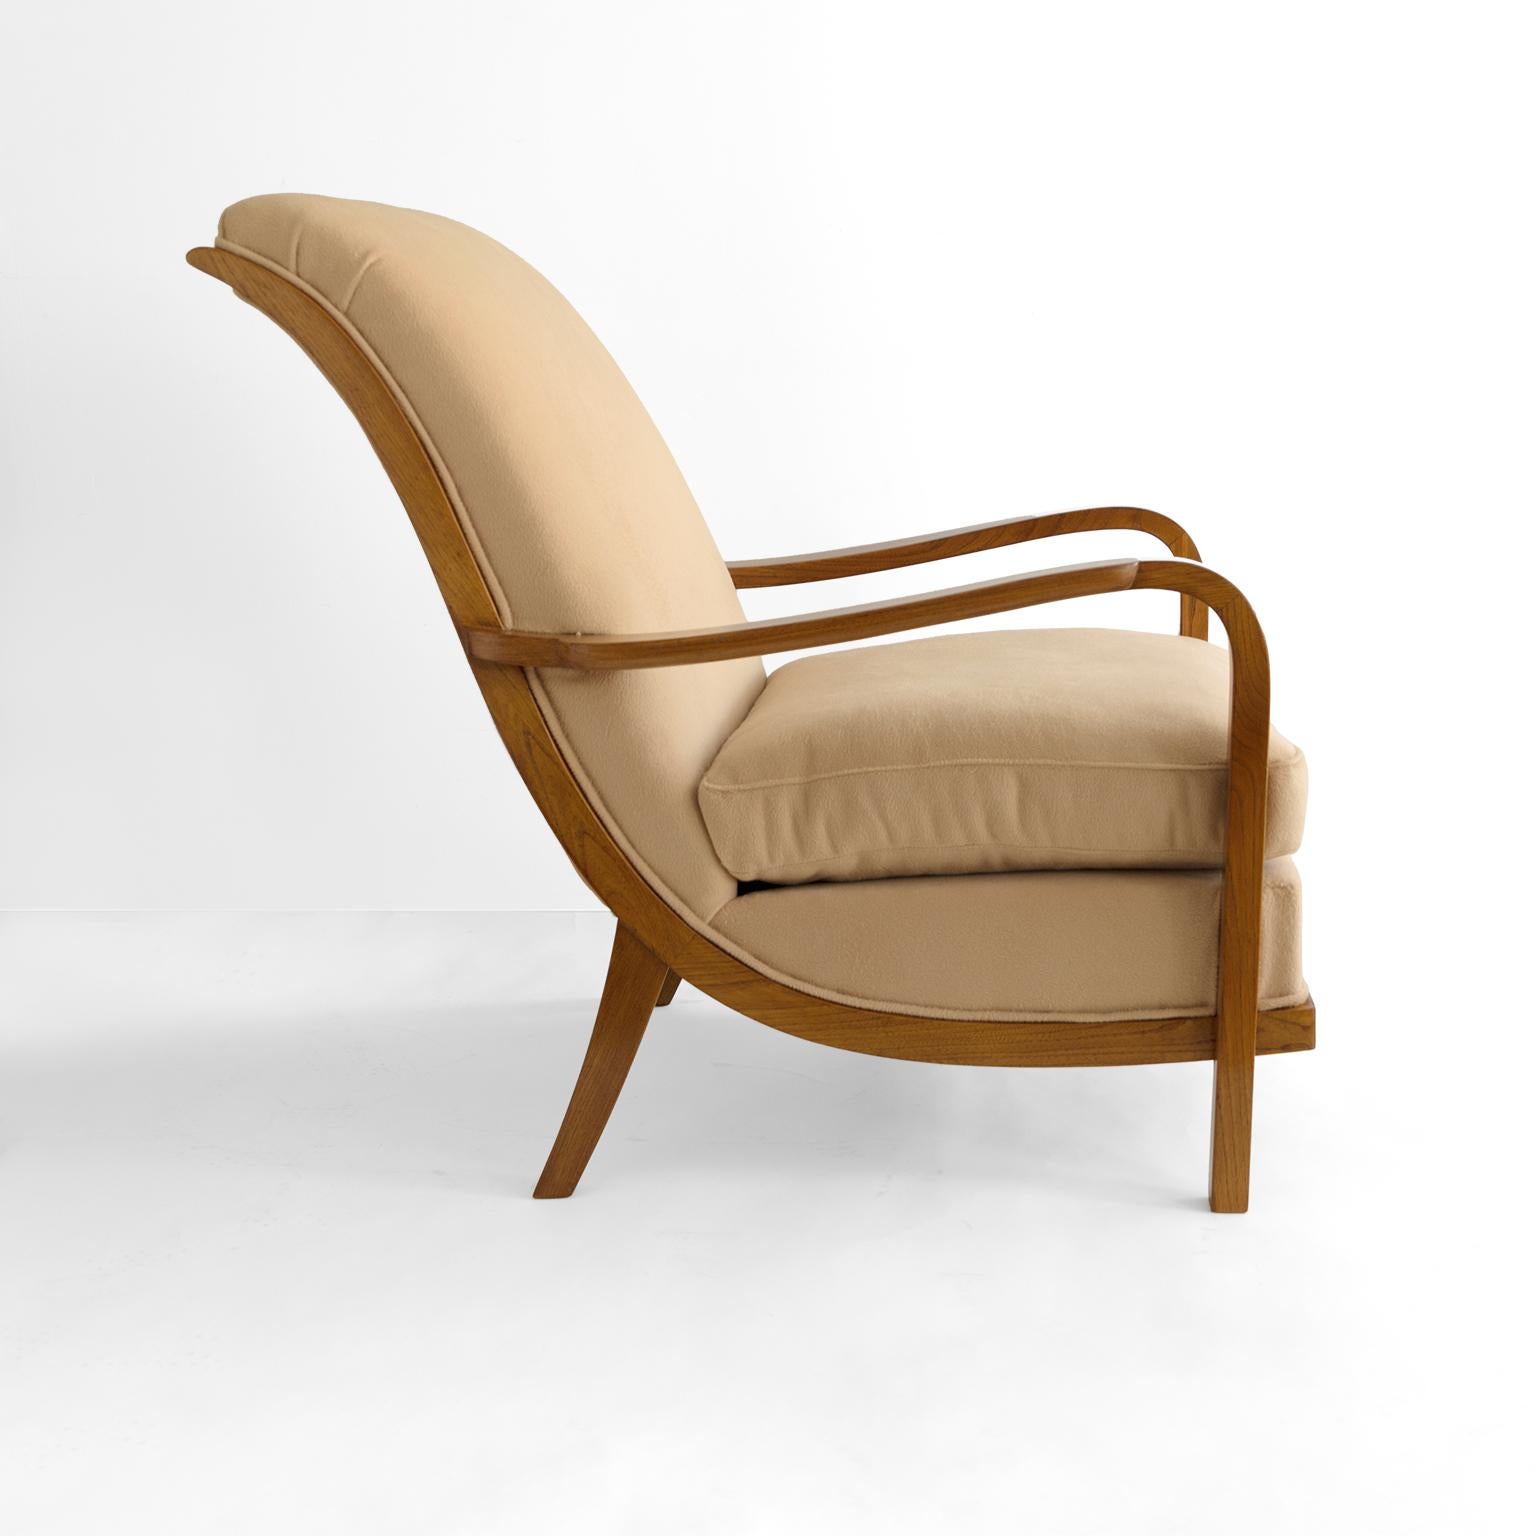 Scandinavian Modern Swedish Art Deco lounge chair by Wilhelm Knoll, Malmo 1933